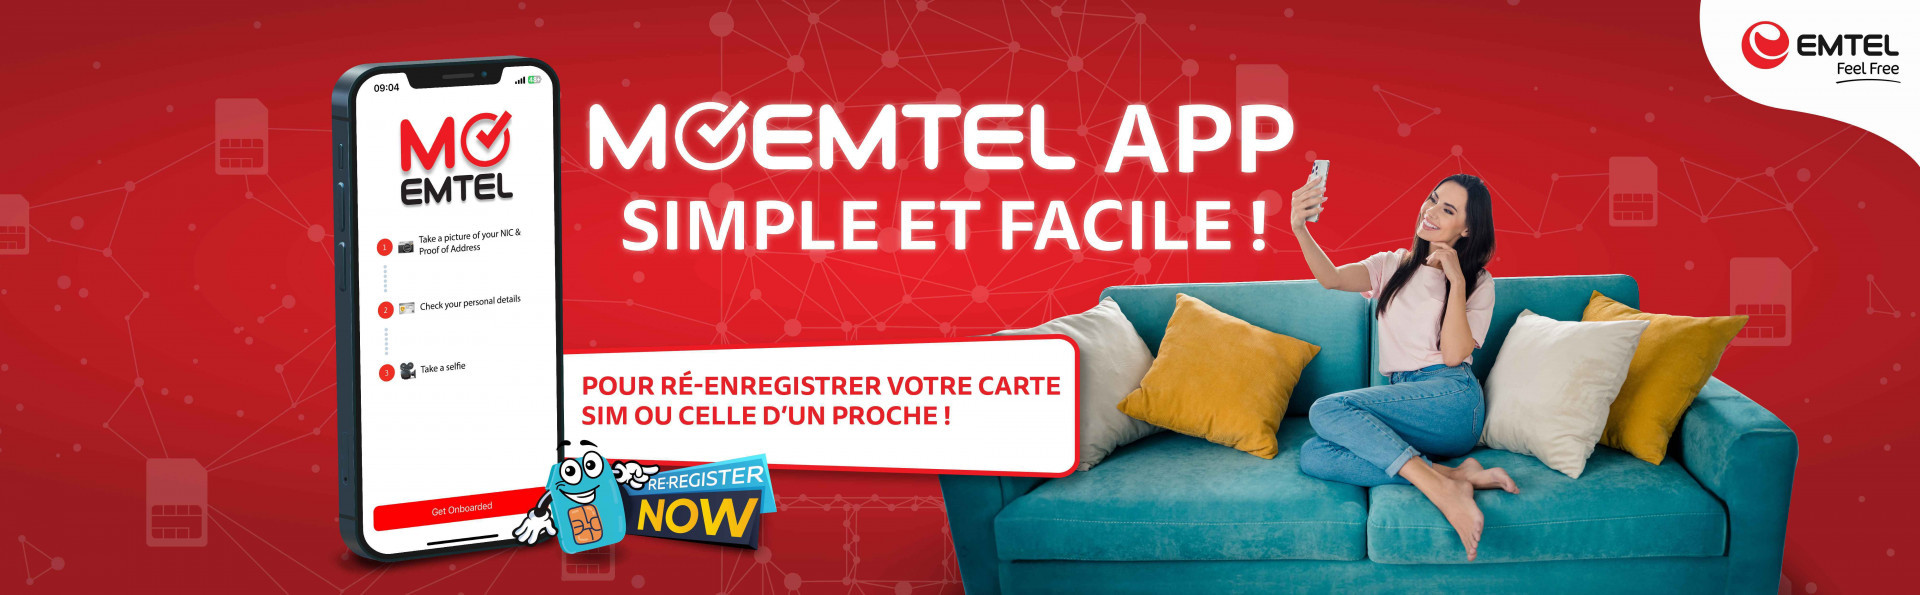 Mo Emtel App